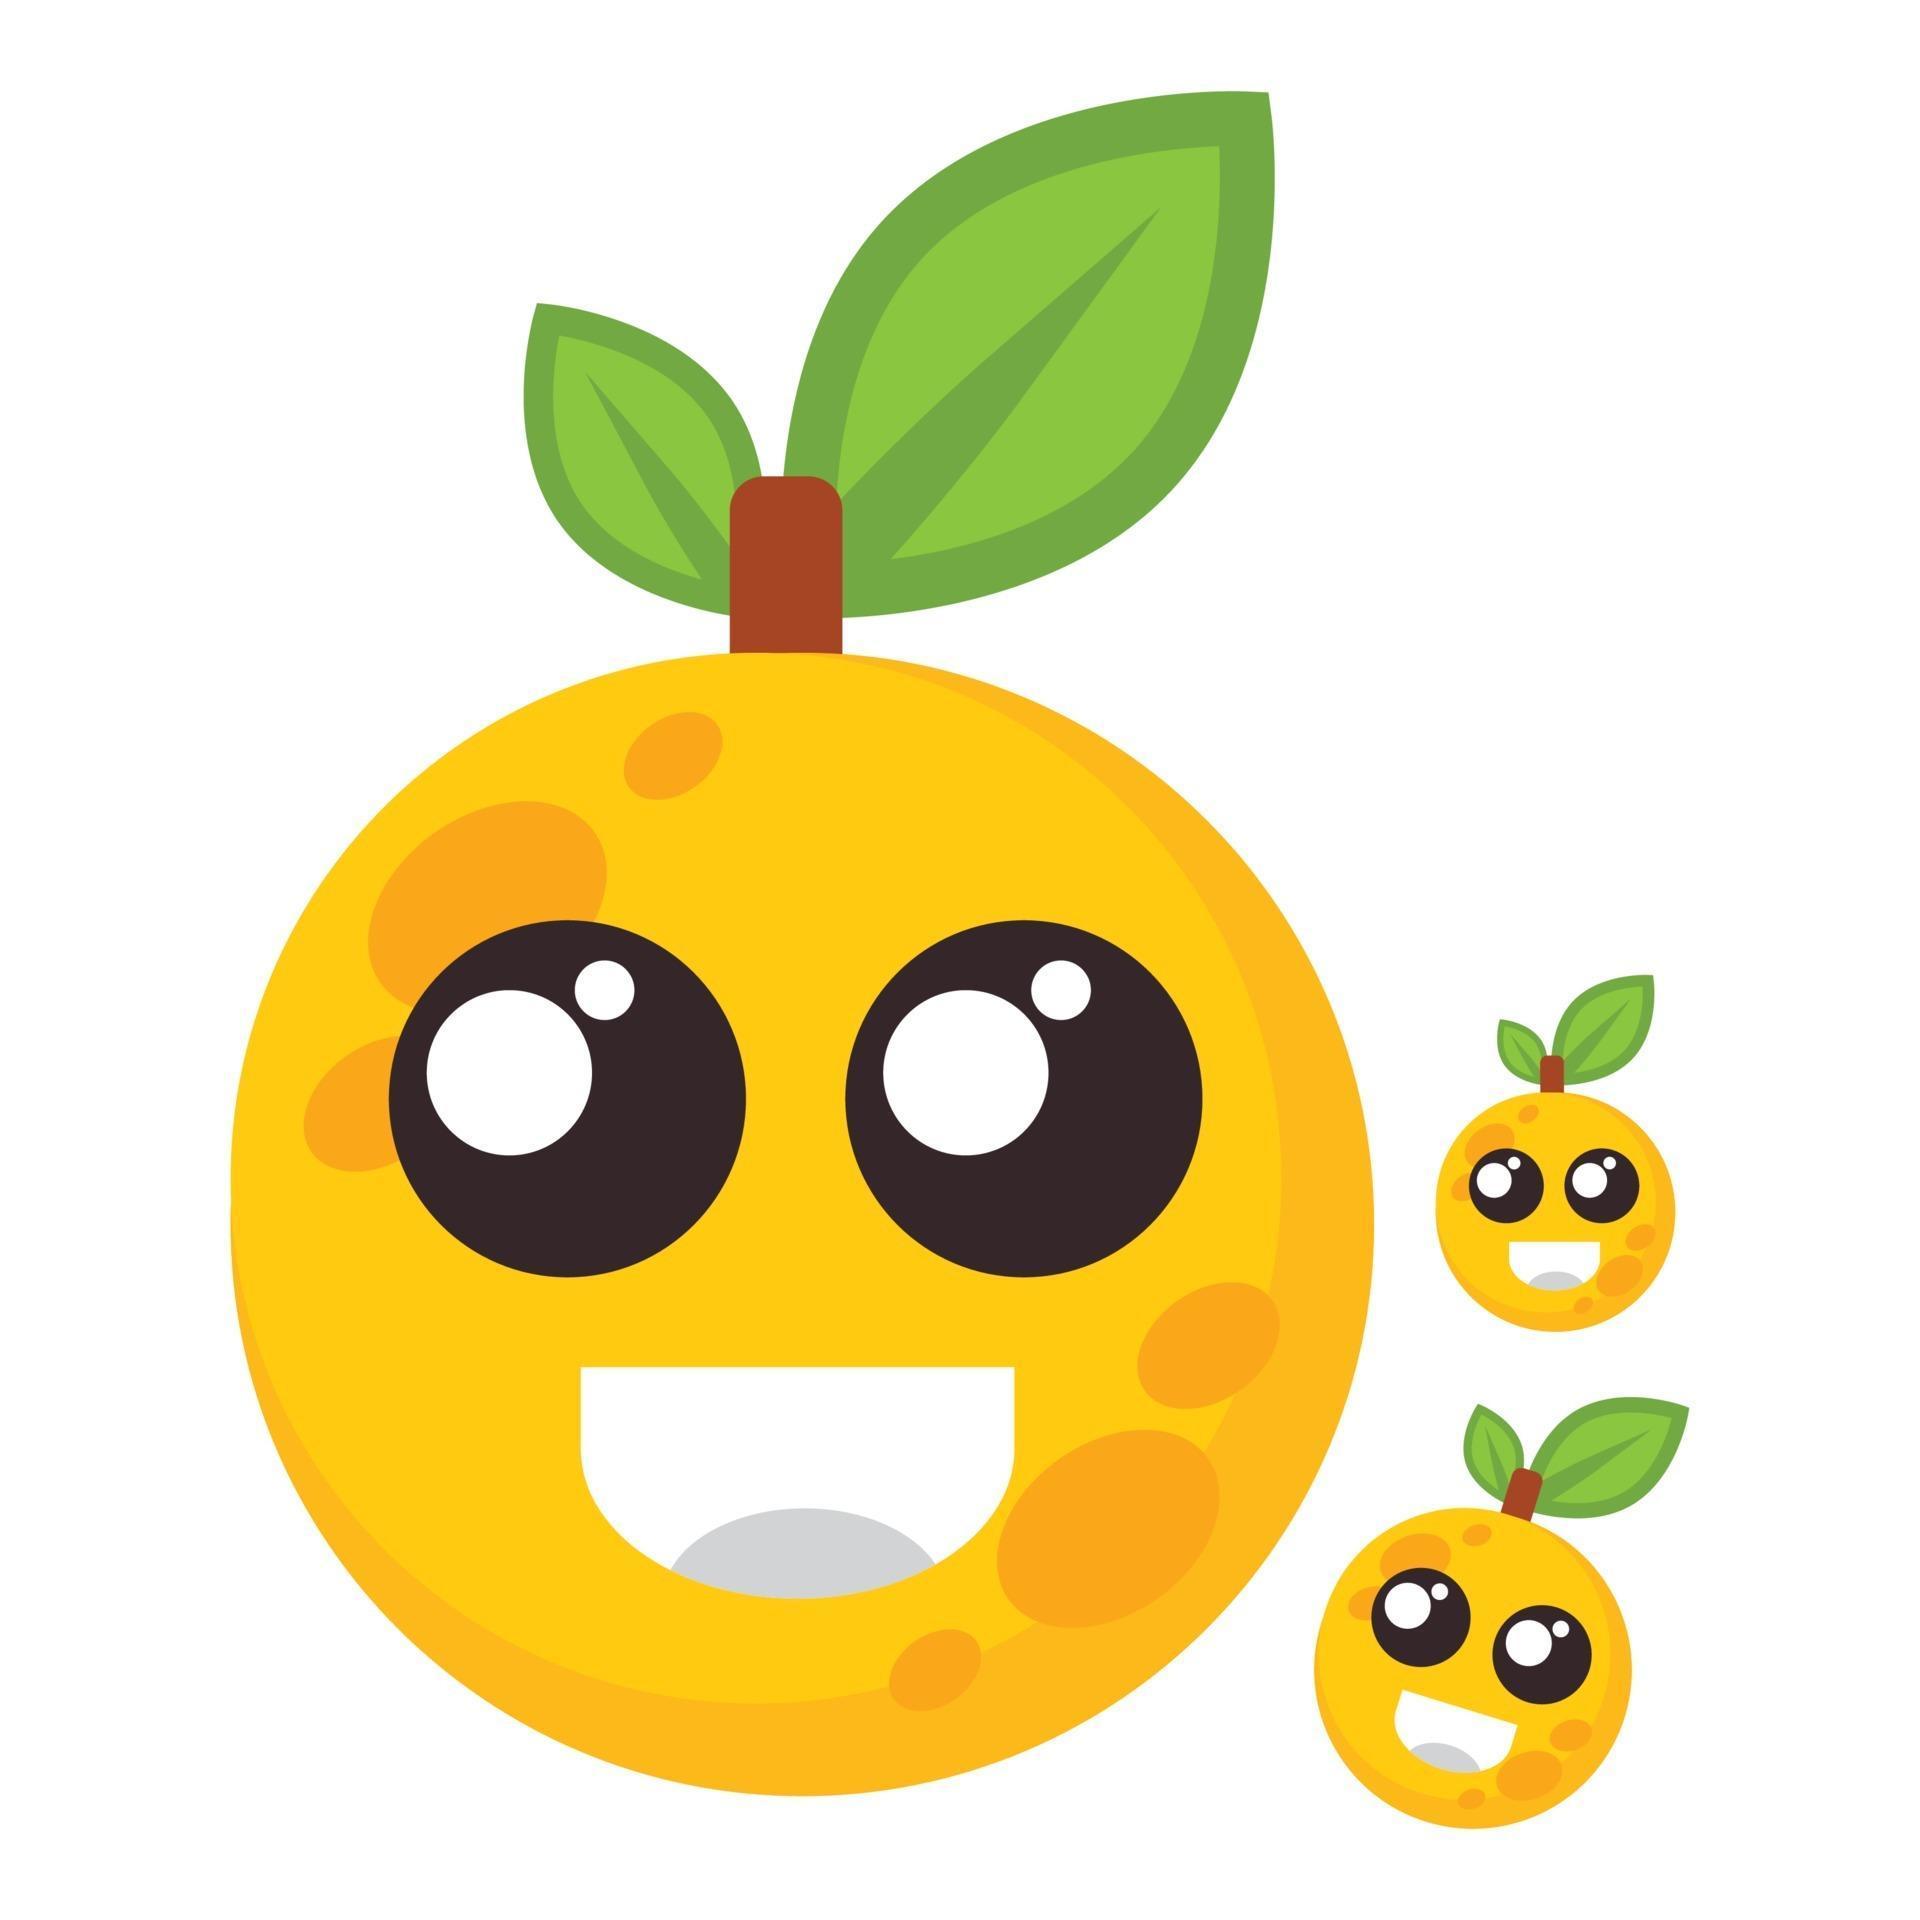 Orange Fruit With Smile Face Illustration World Vegan Day 3205947